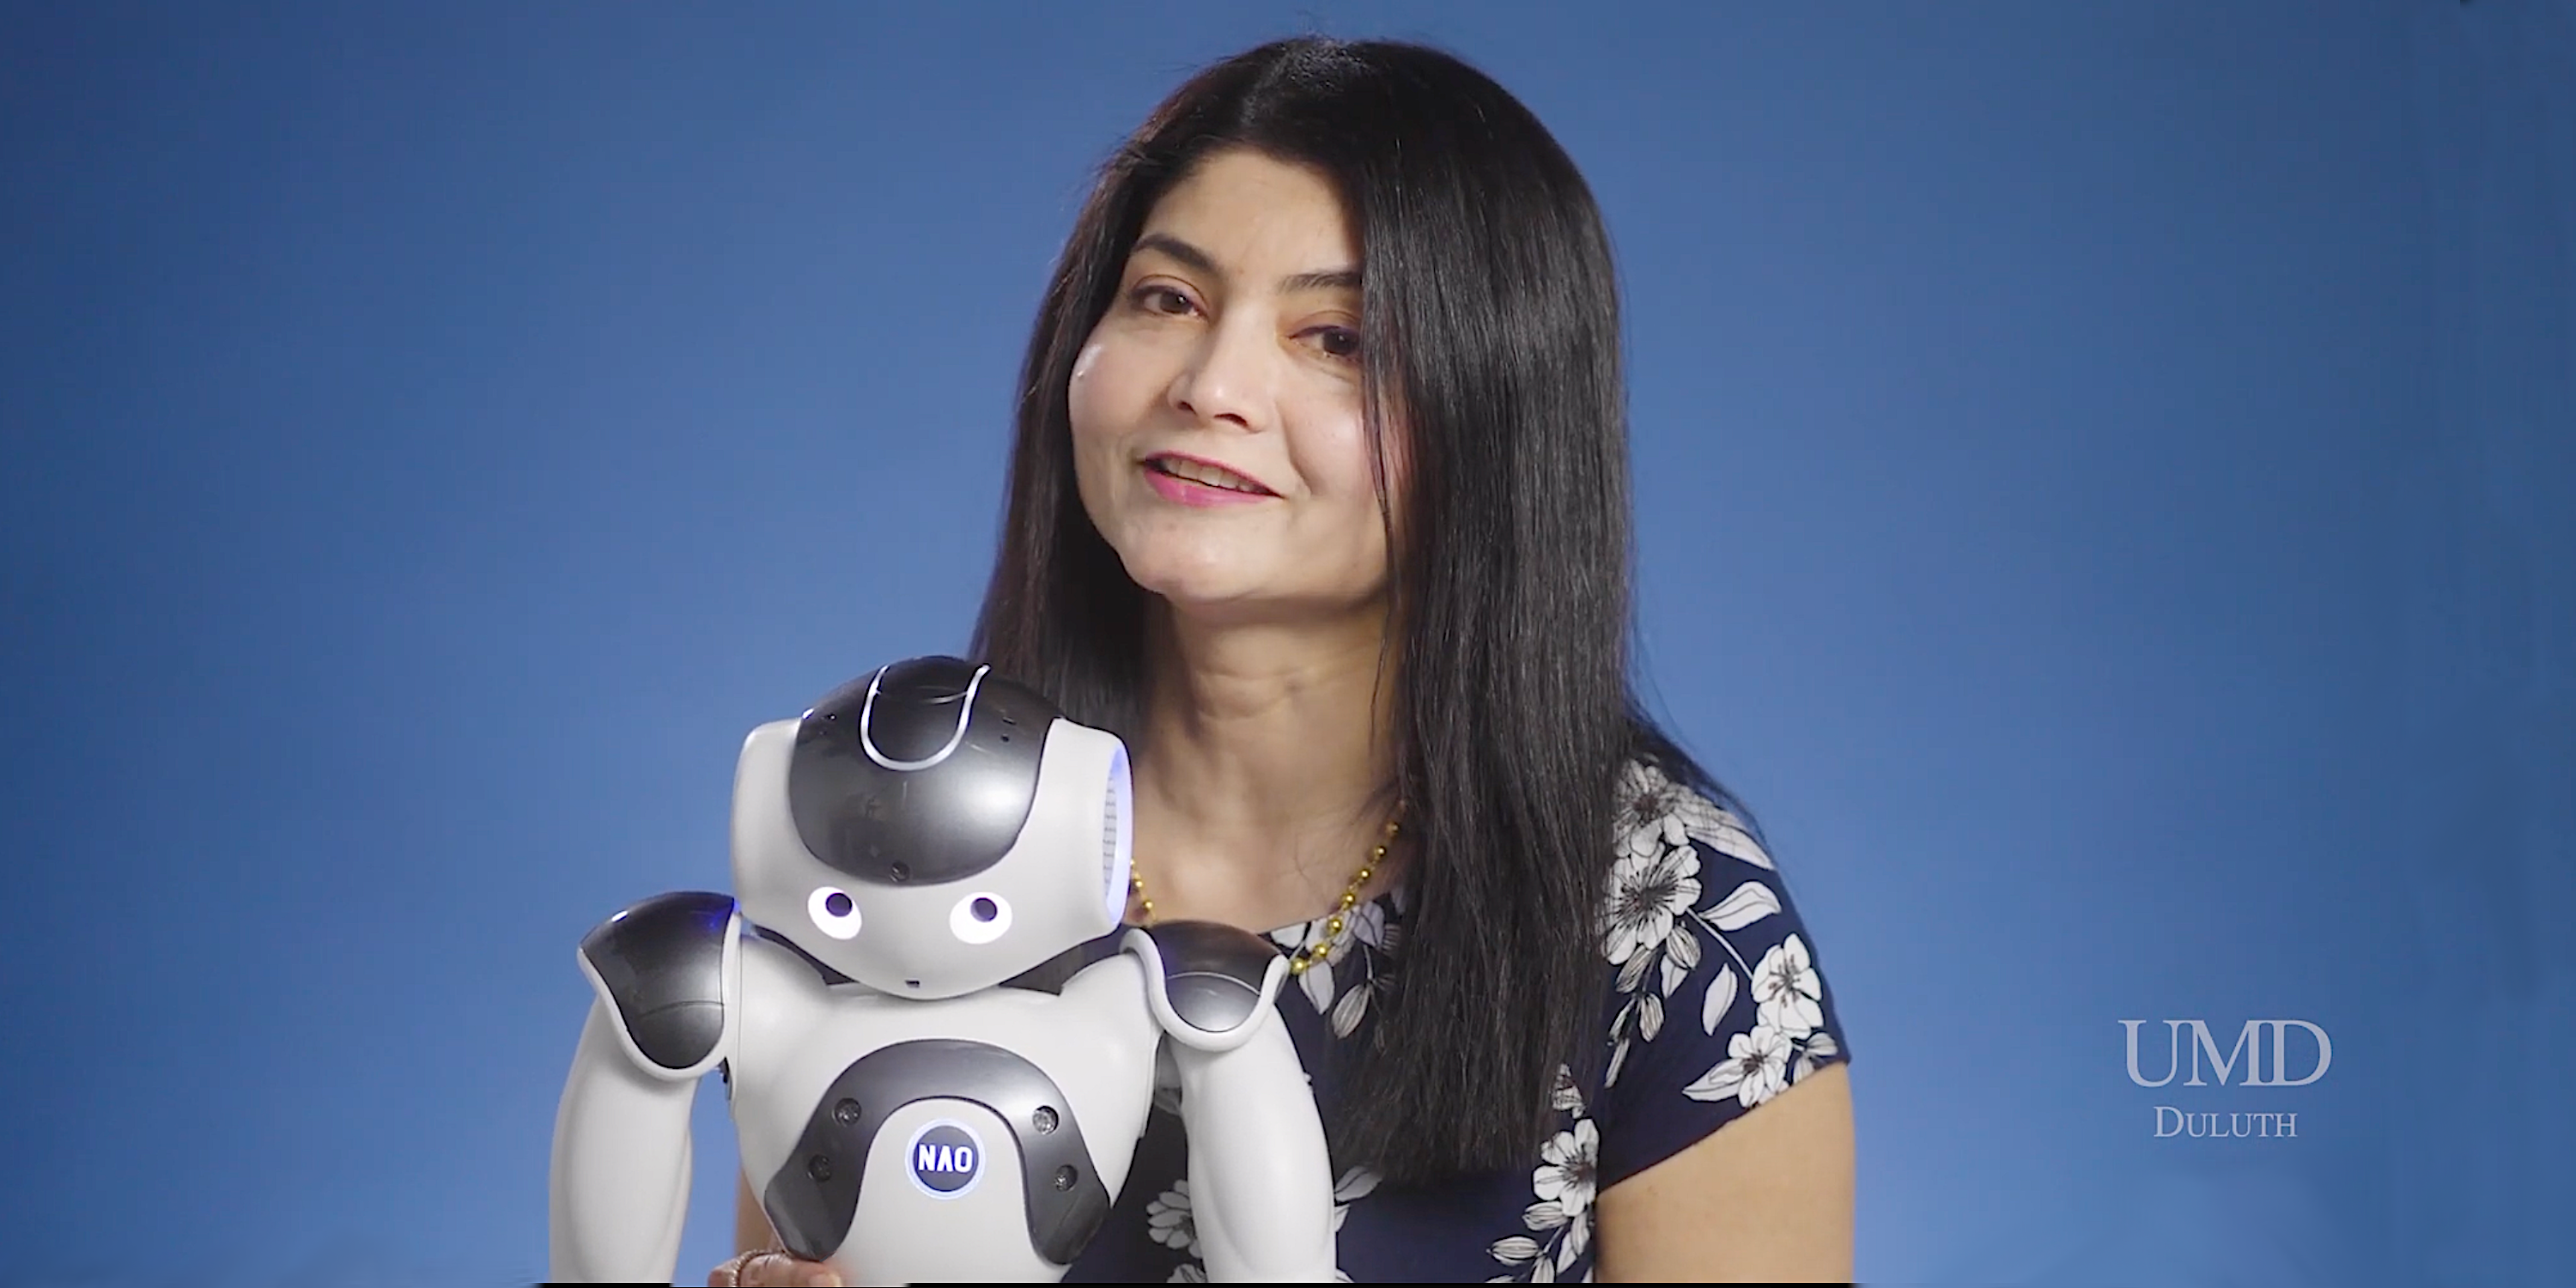 Arshia Khan with a robot